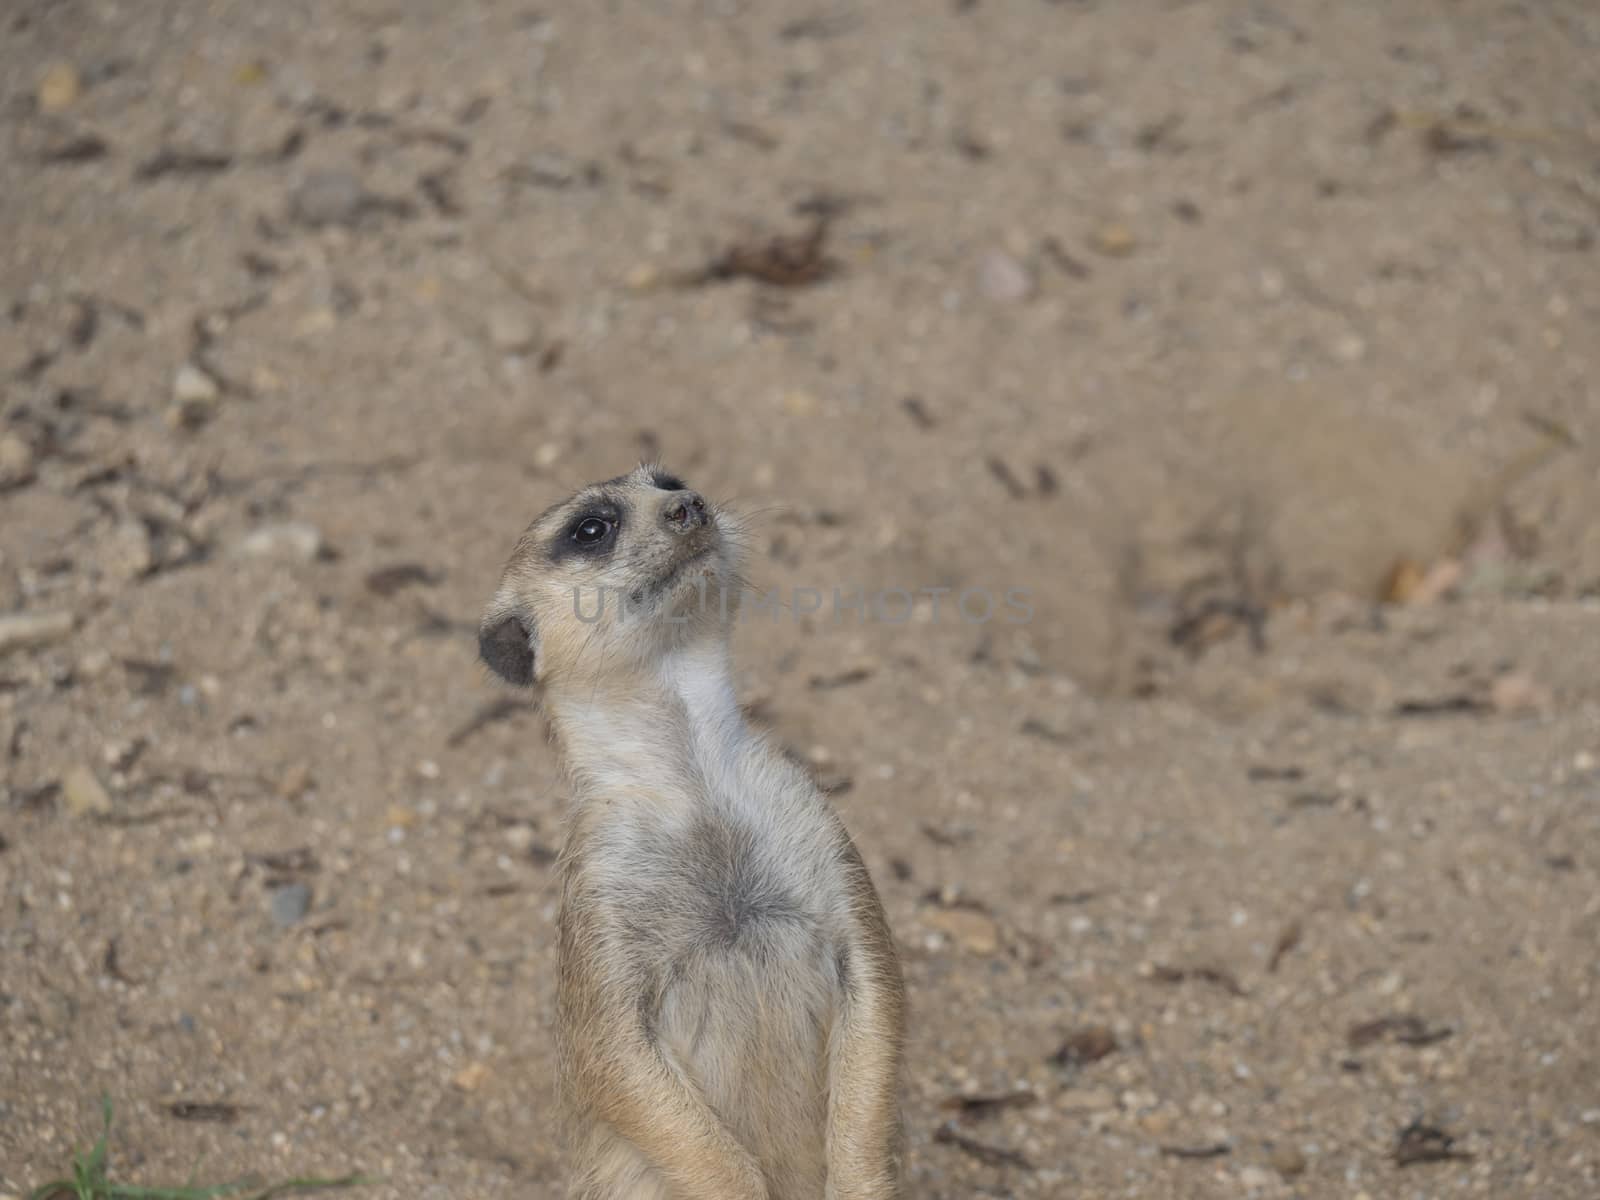 Close up standing meerkat or suricate, Suricata suricatta looking up, selective focus, copy space for text by Henkeova